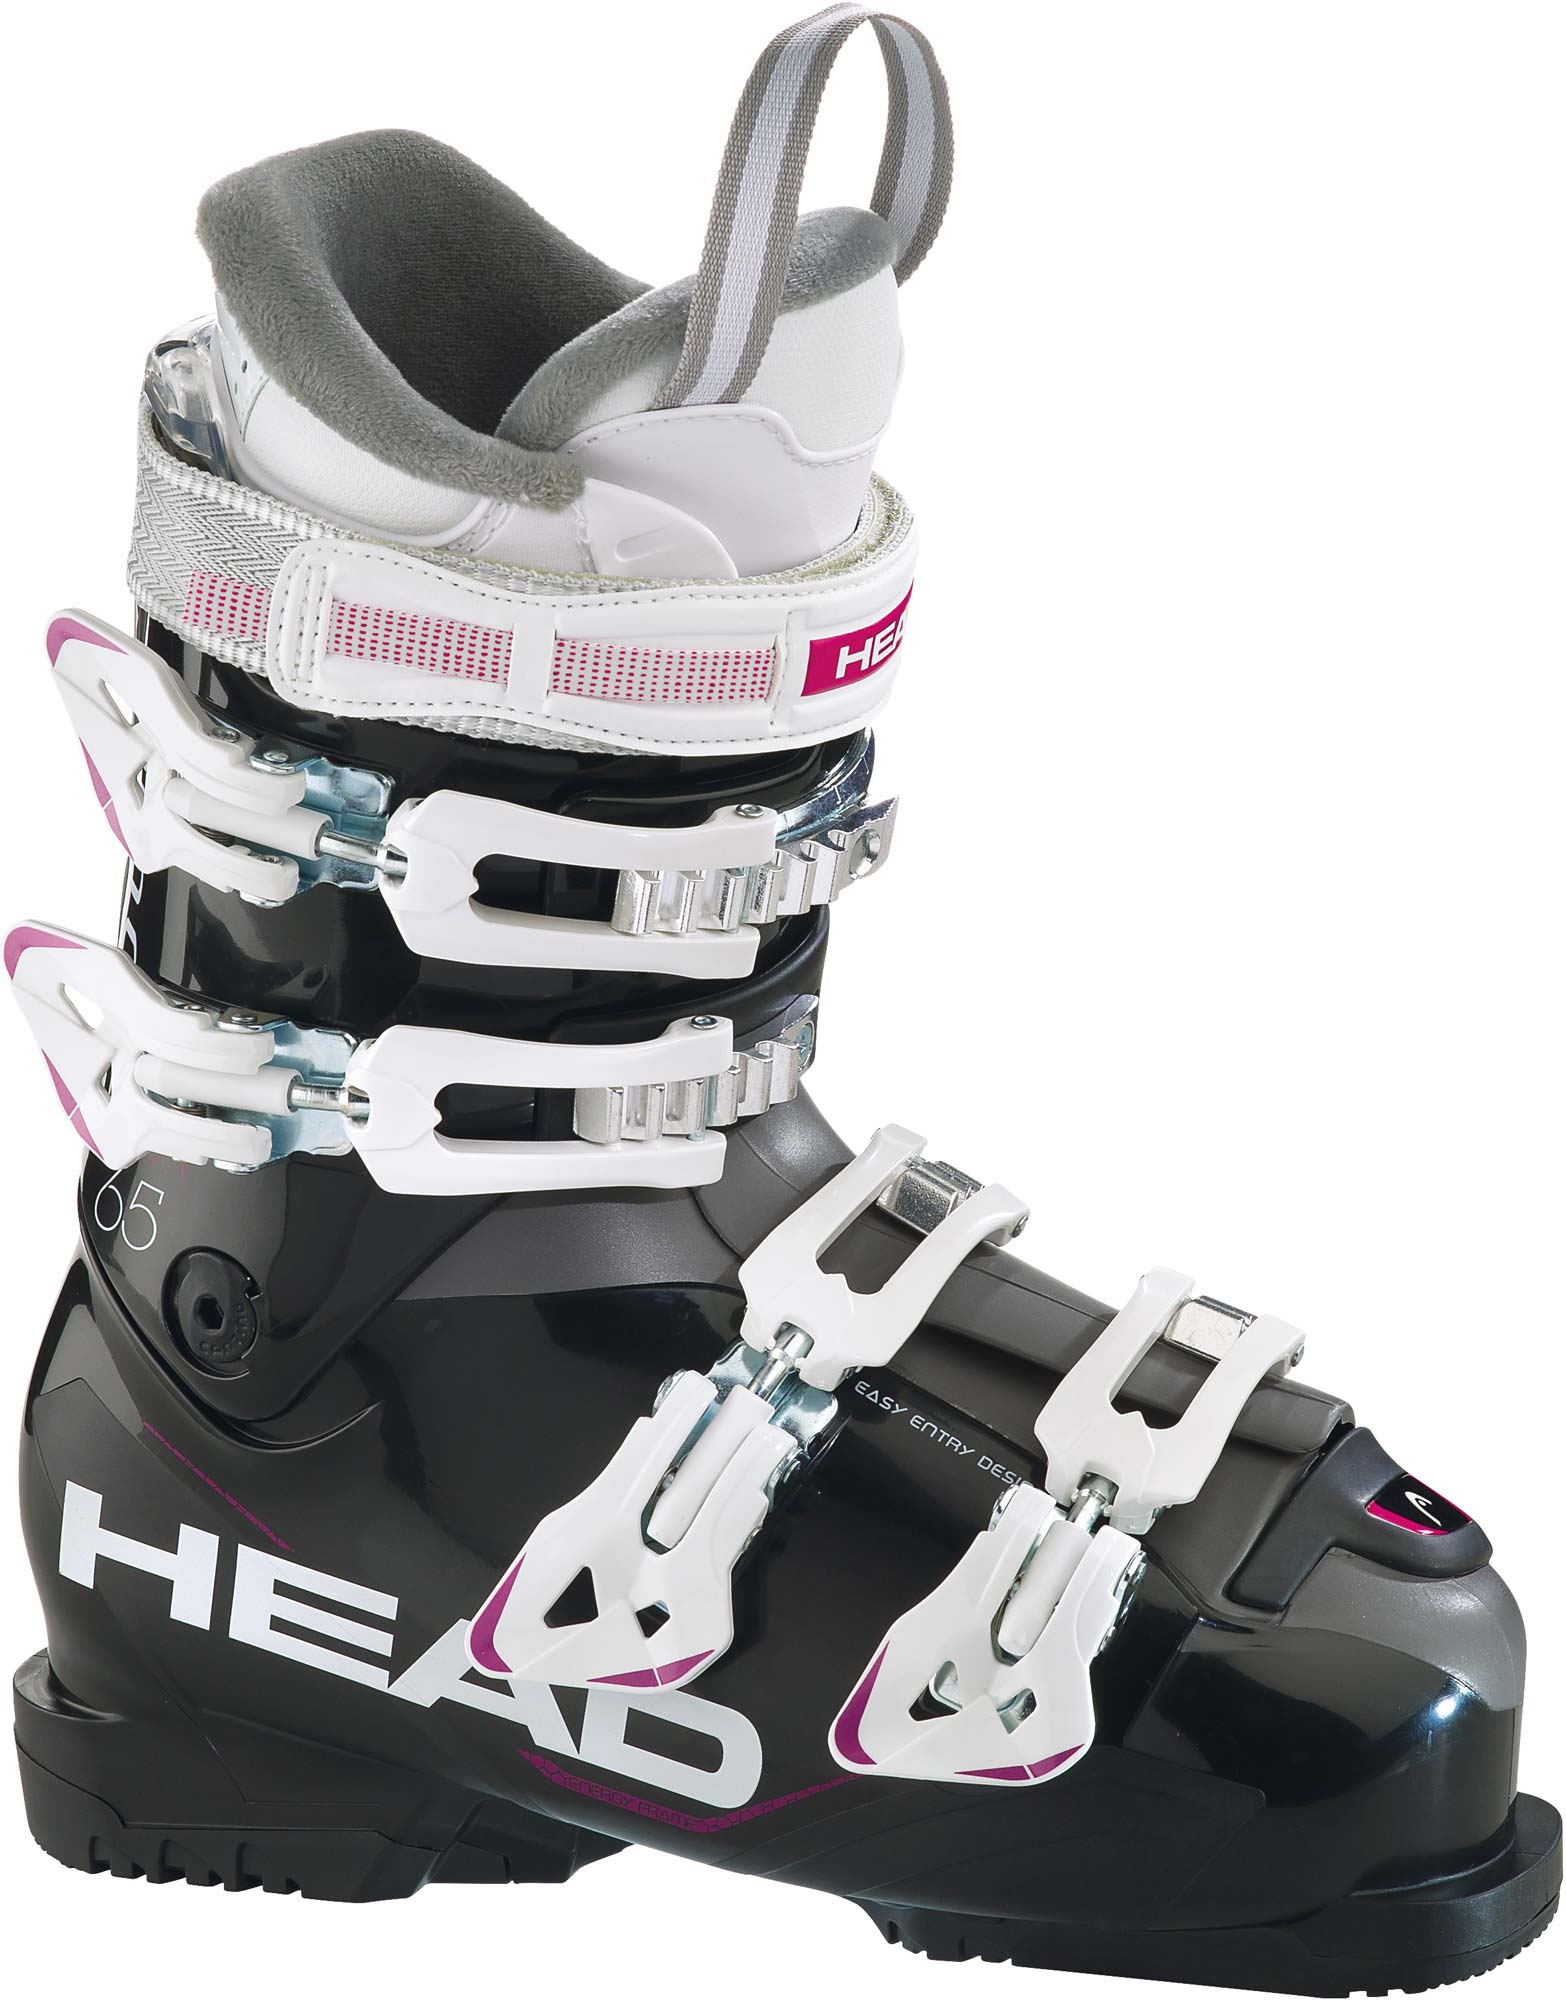 NEXT EDGE 65 W - Women's Alpine Ski Boots